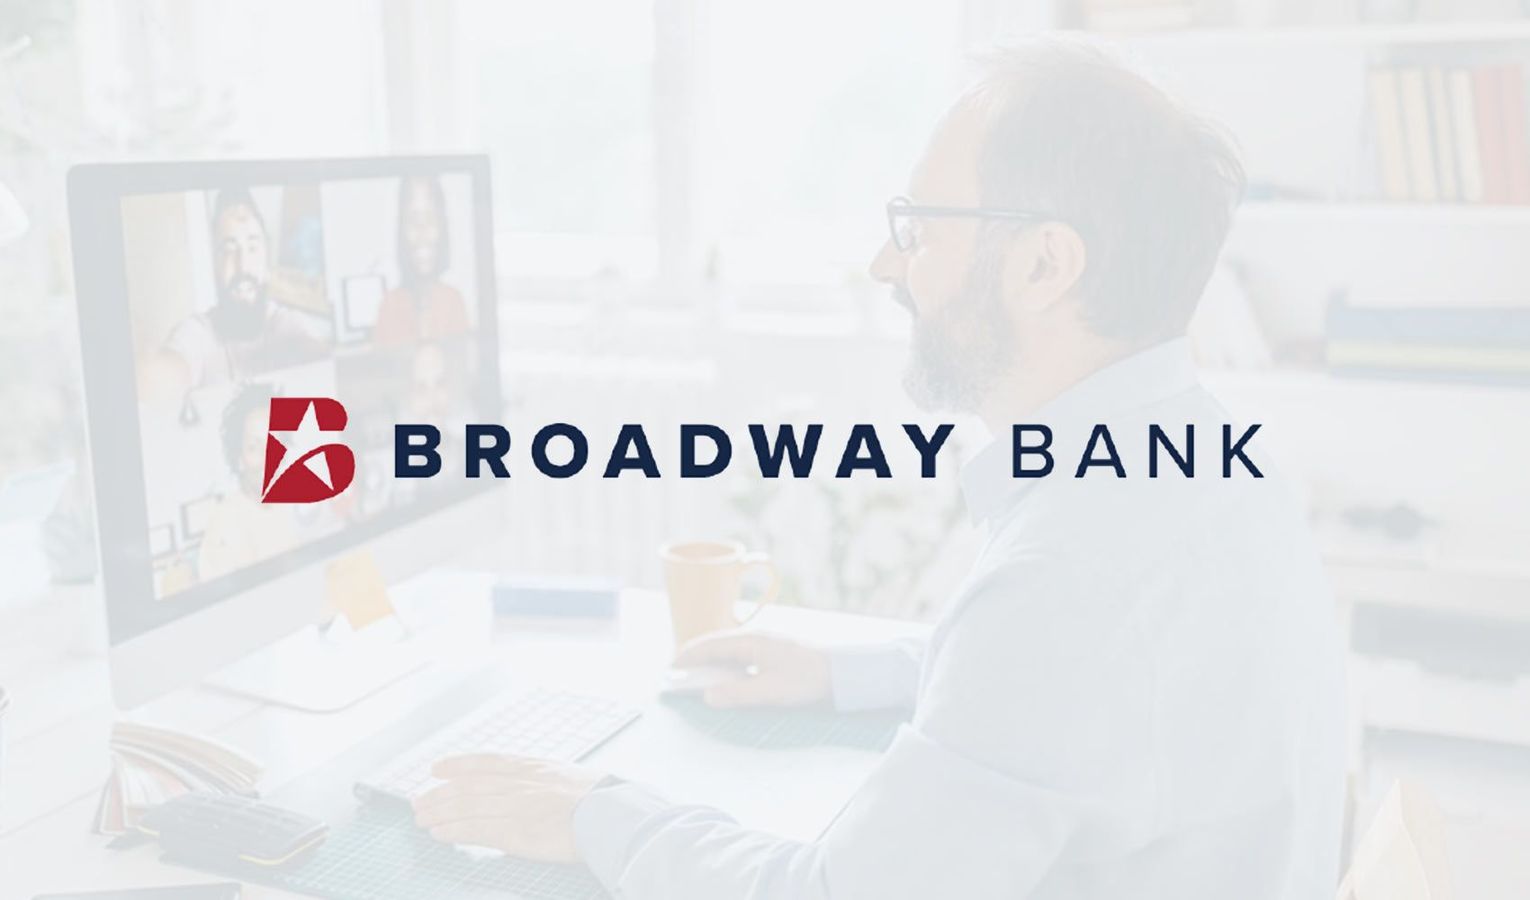 Broadway Bank Case Study